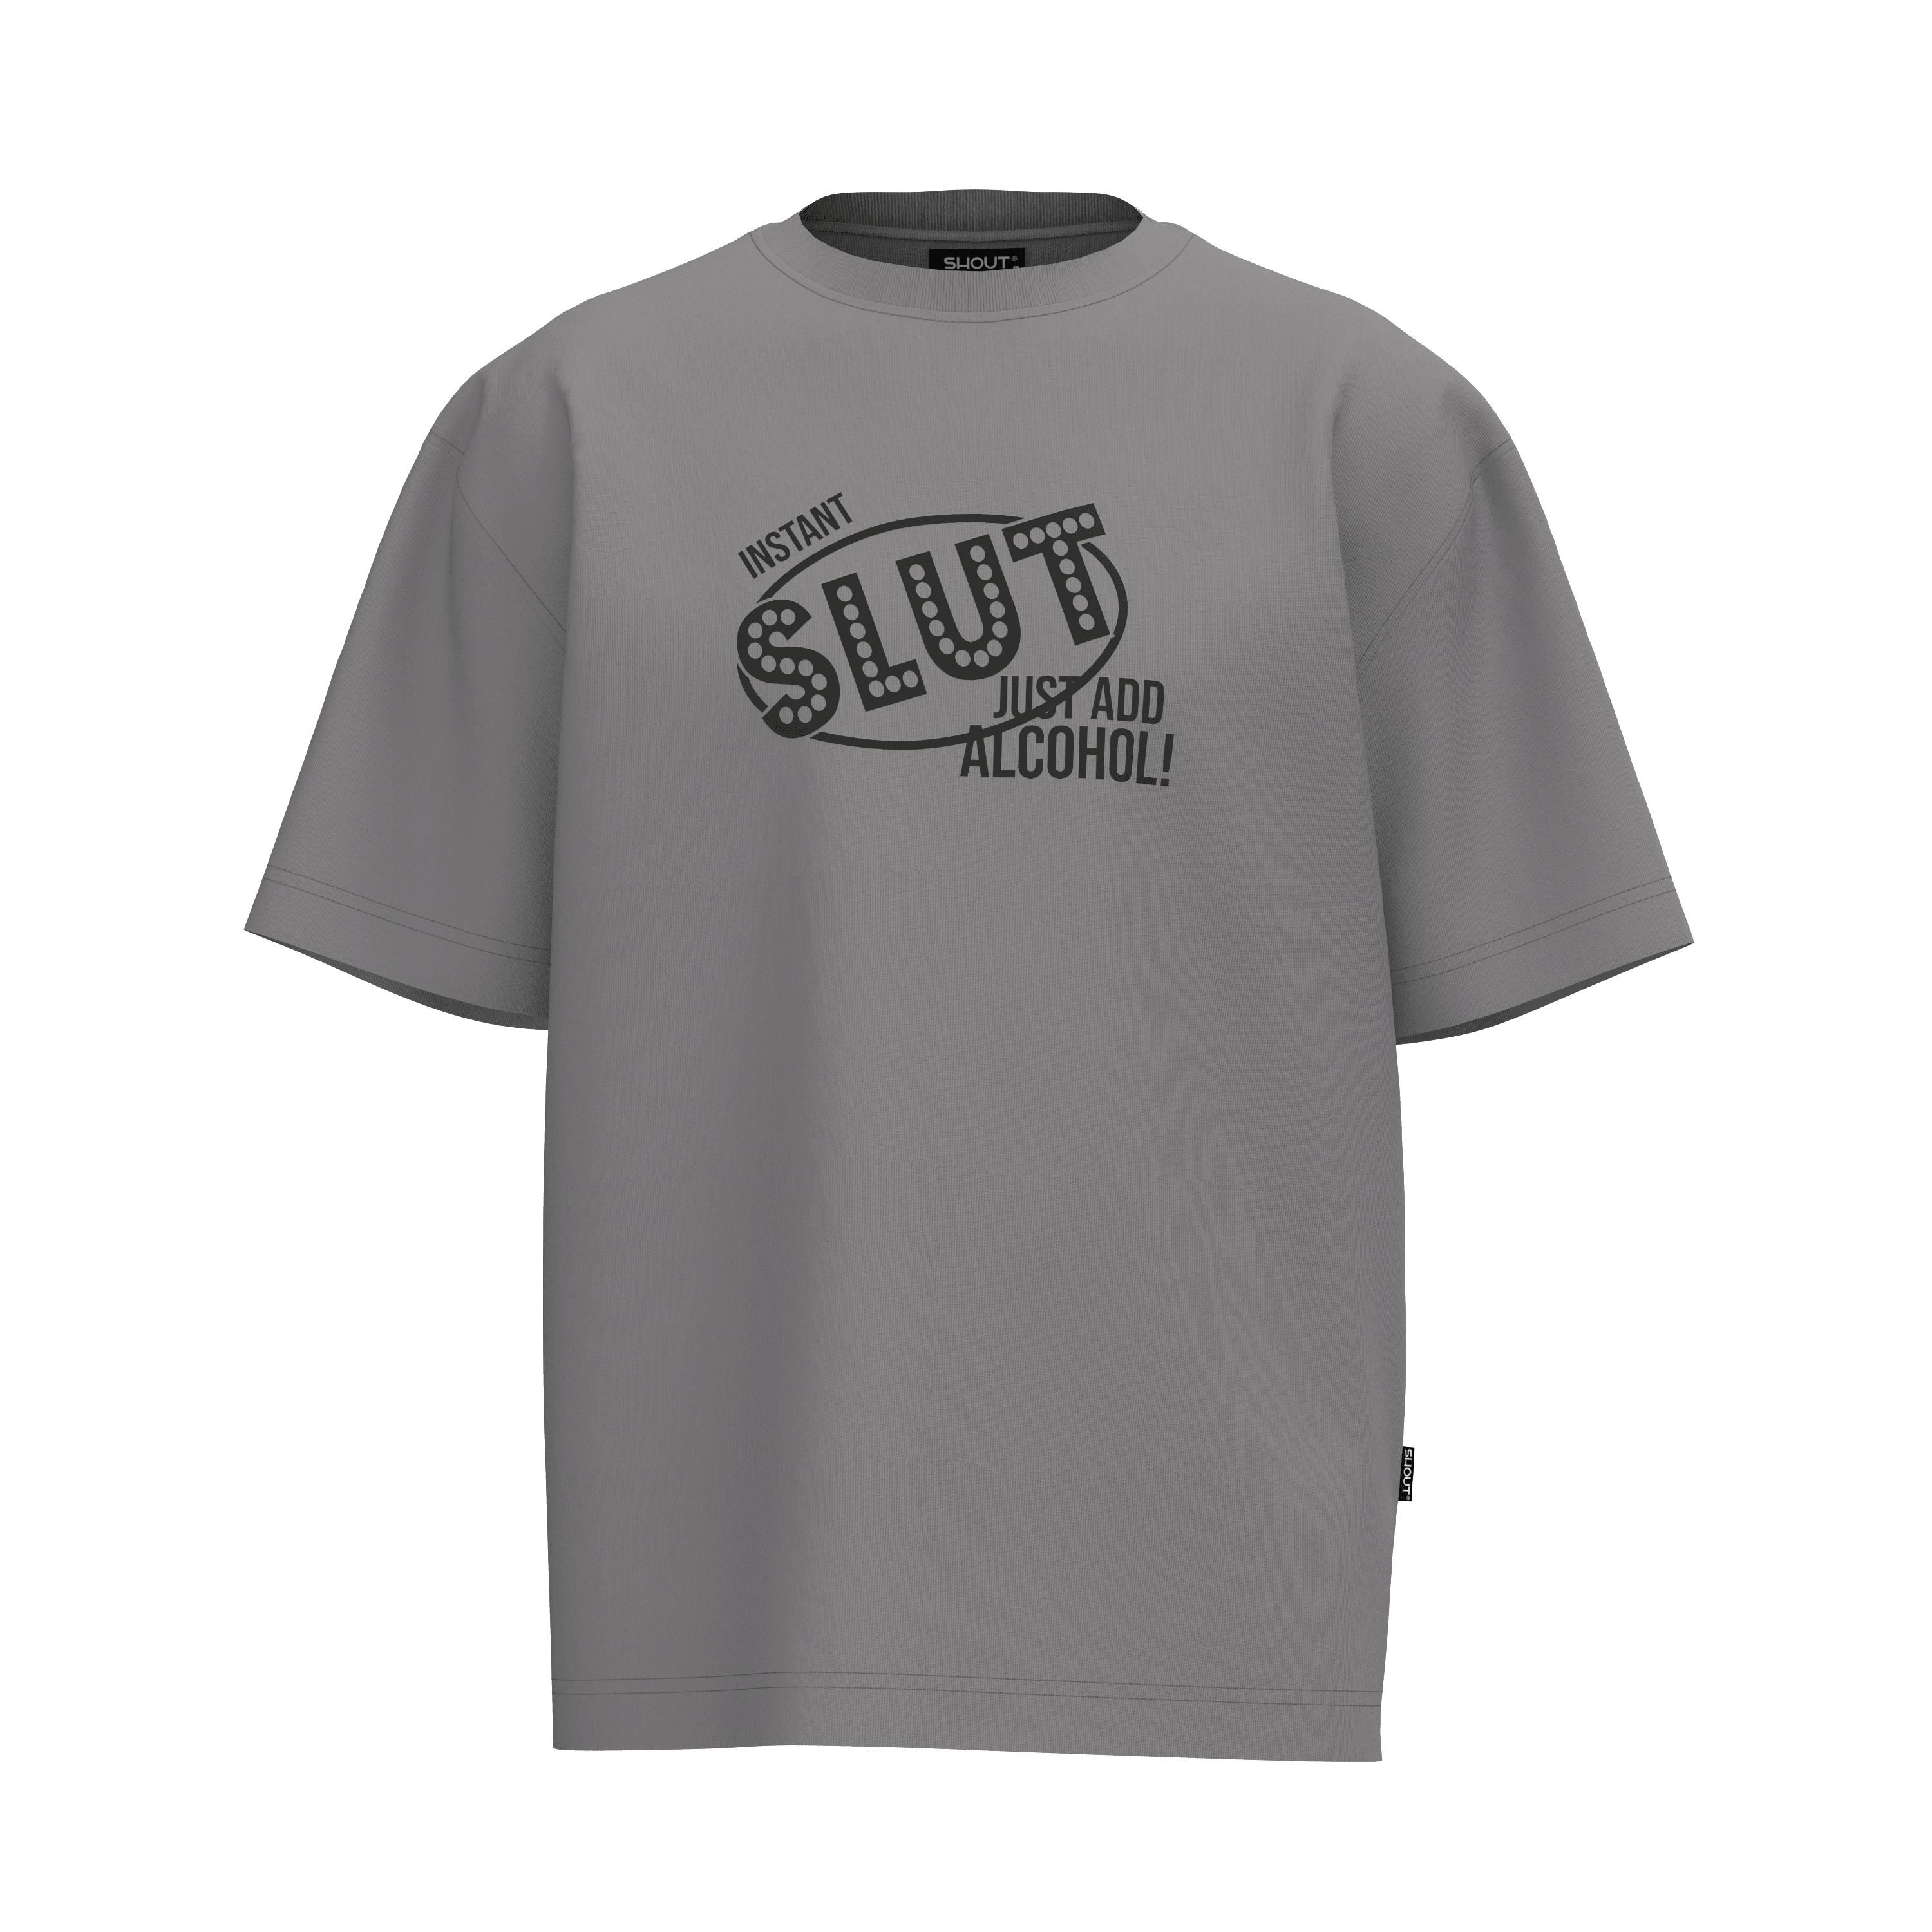 Shout Oversize Instant Slut Just Add Alcohol Grey Unisex T-Shirt